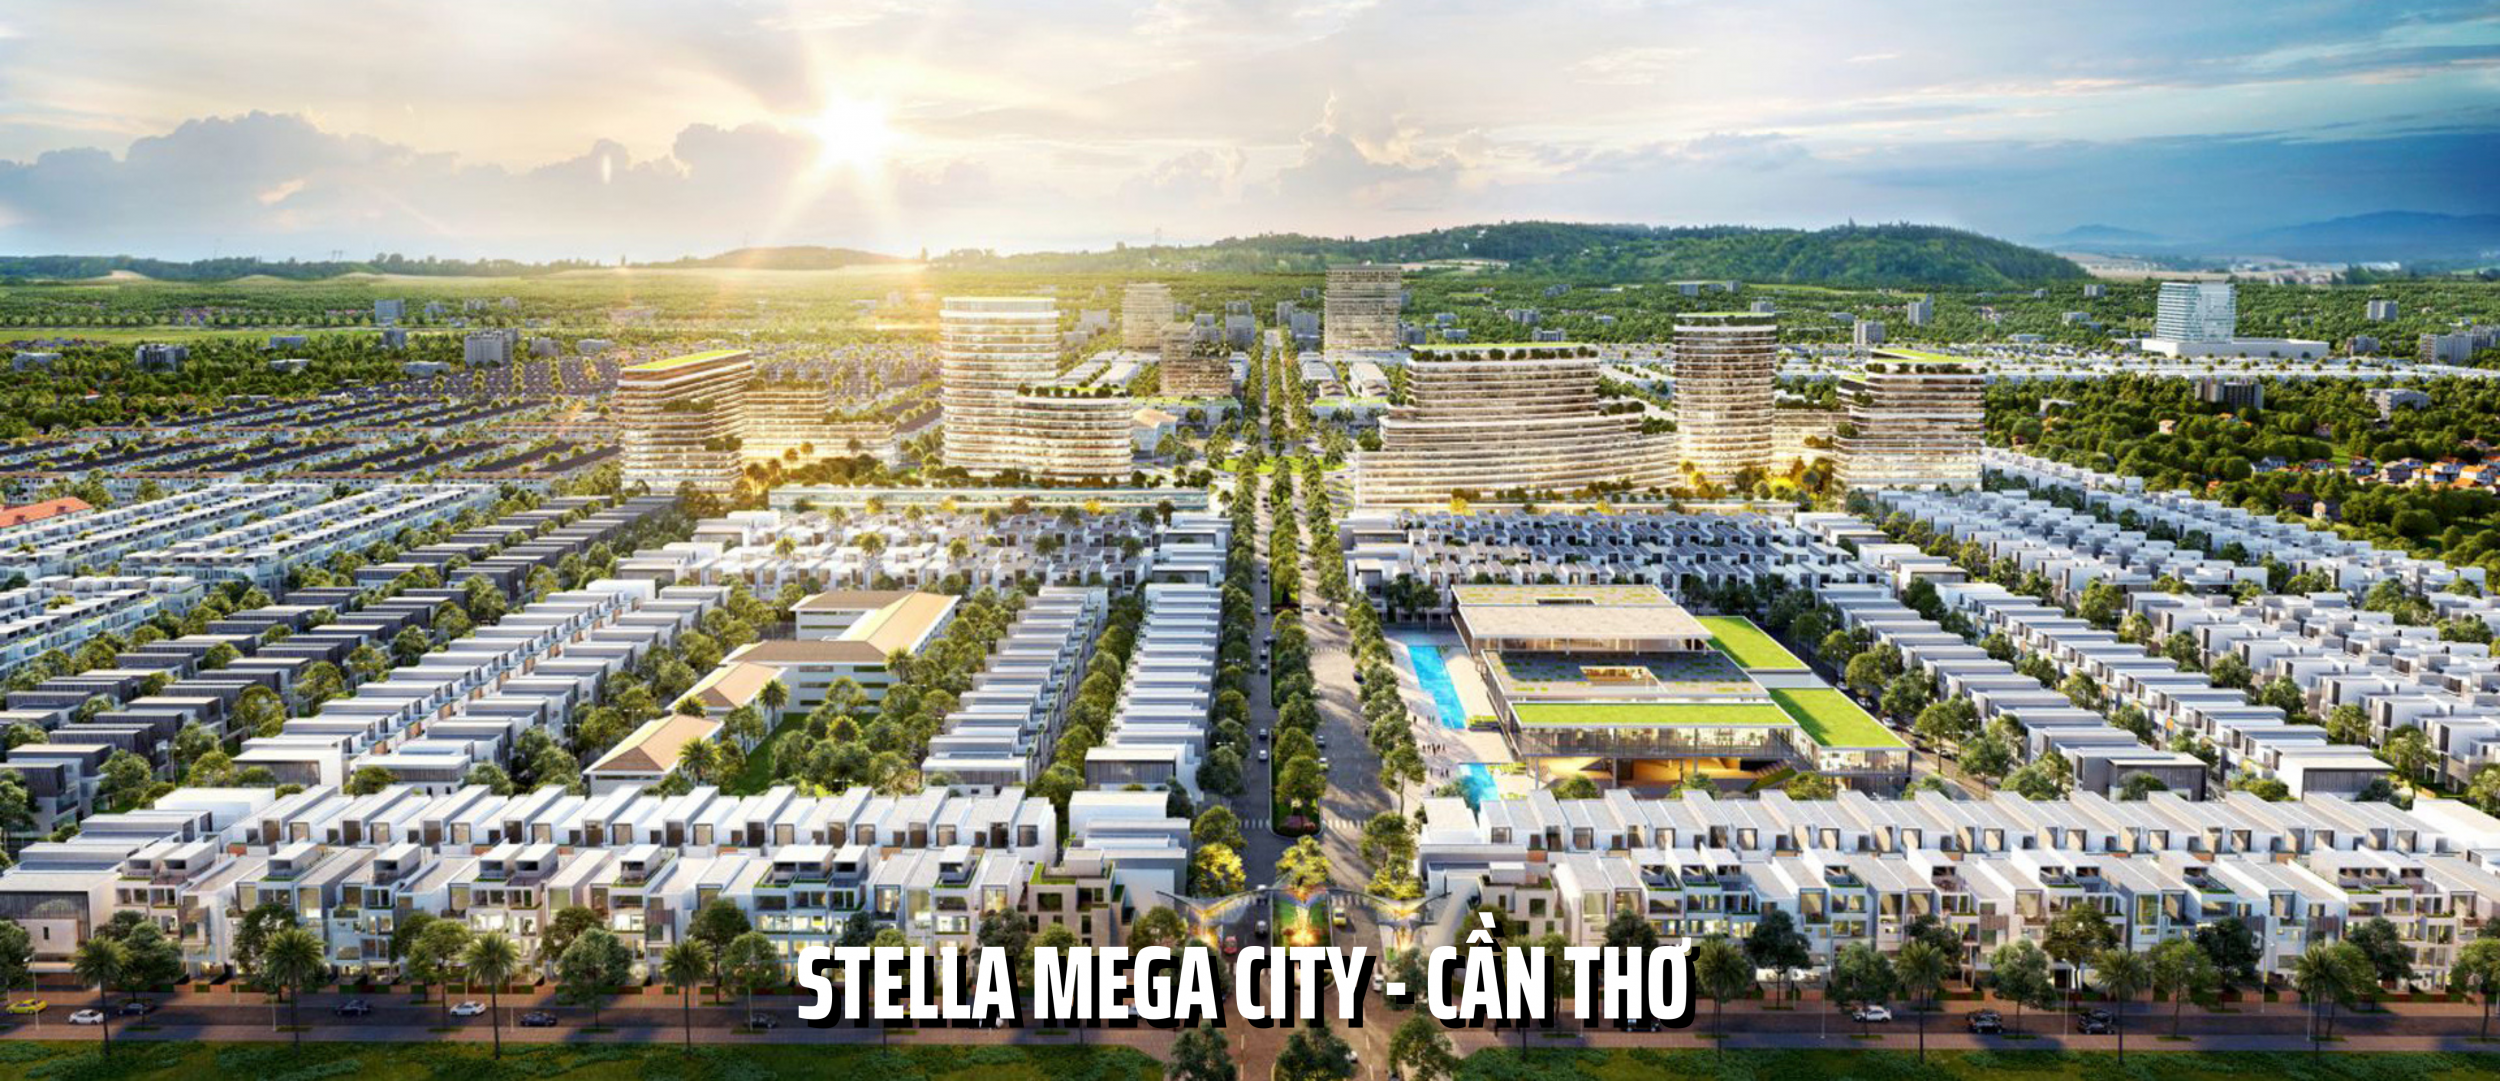 STELLA MEGA CITY  - CAN THO